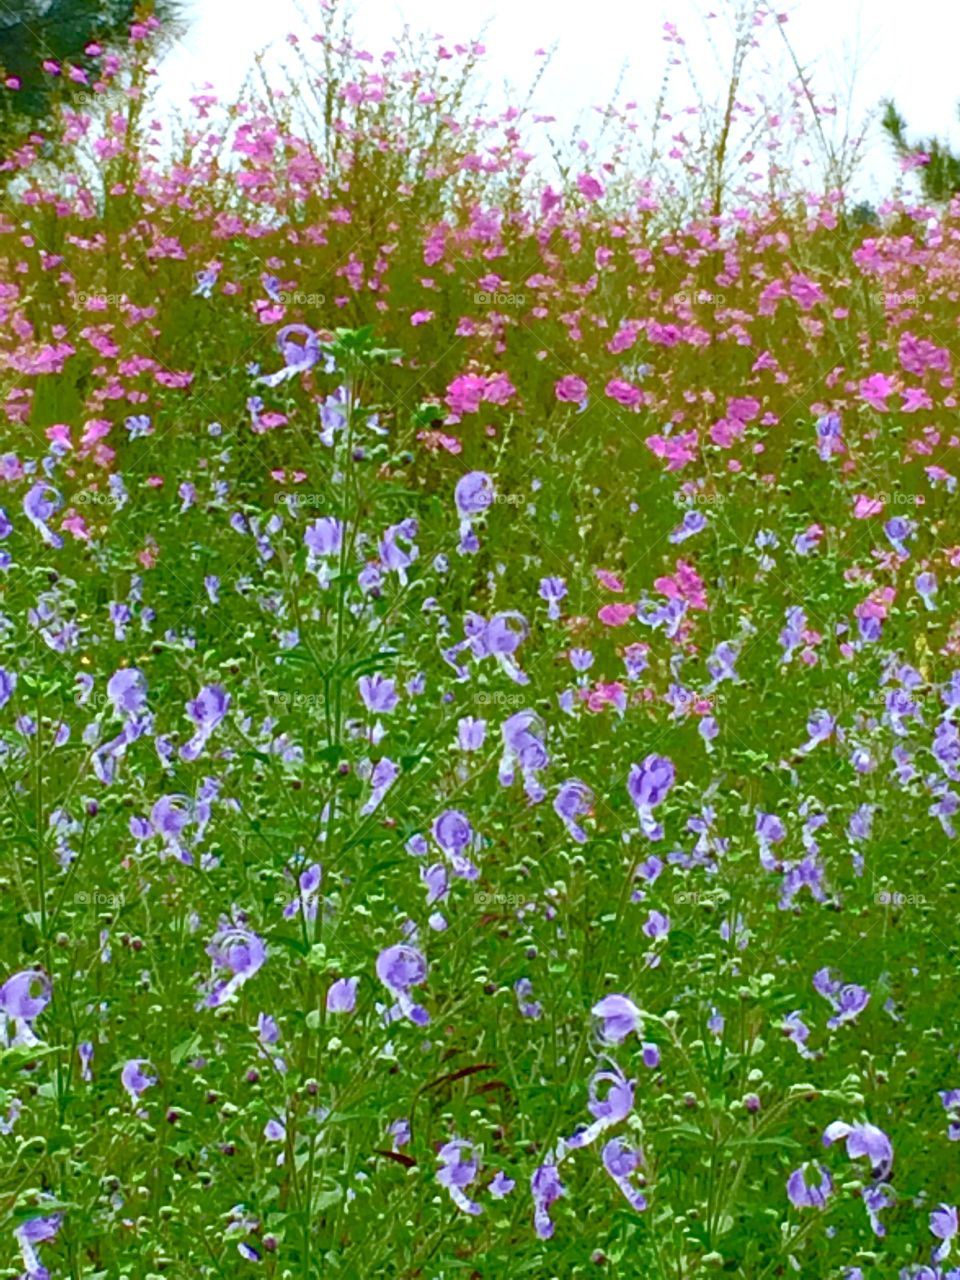 Meadow of flowers